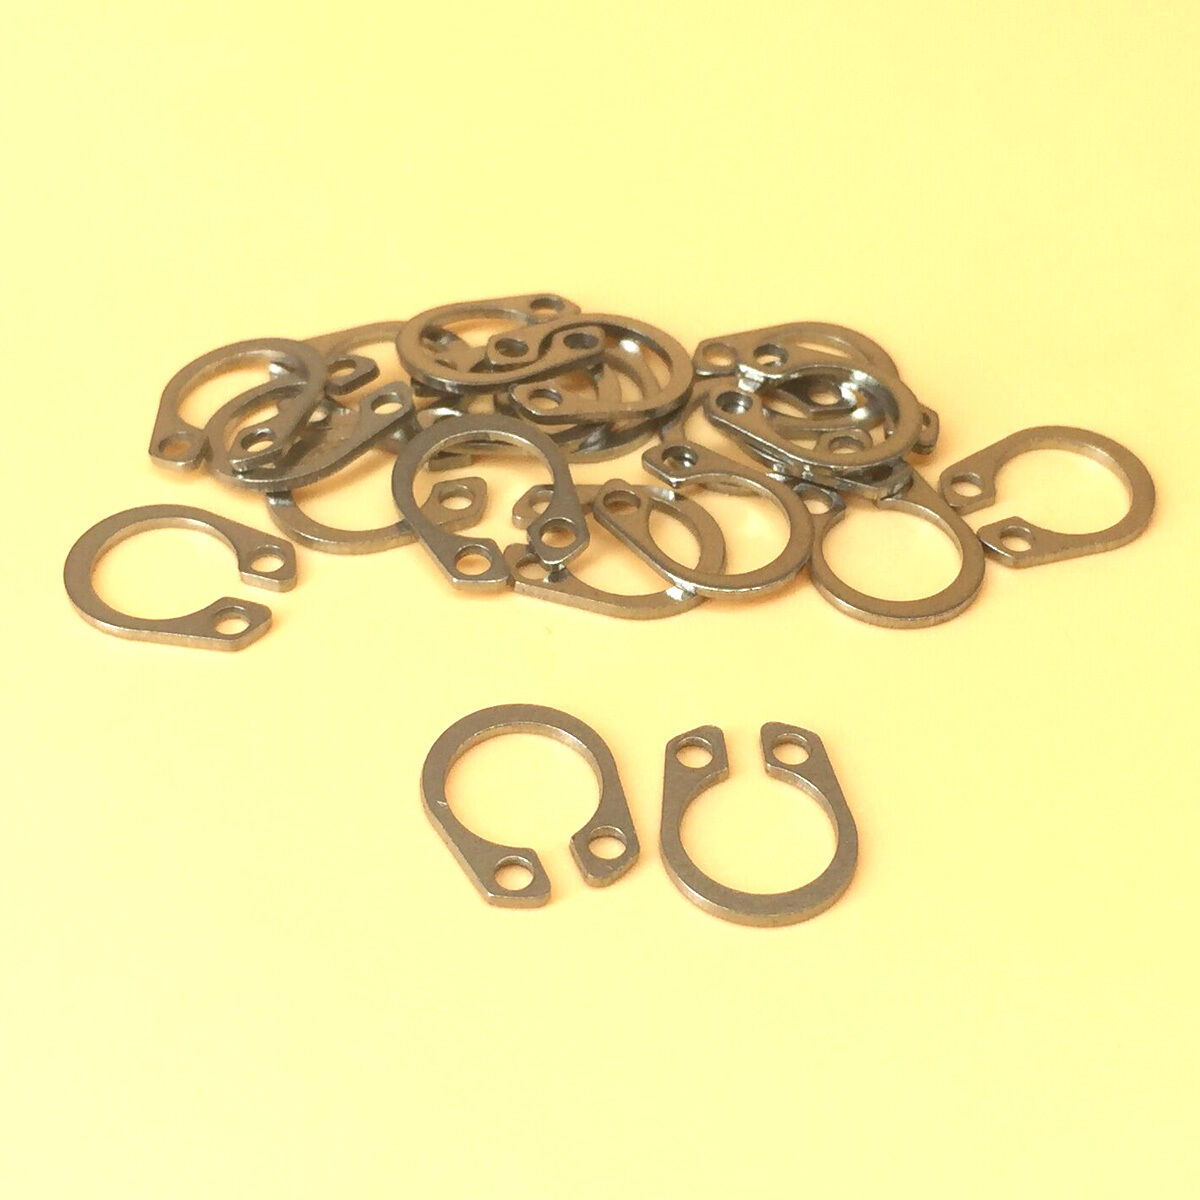 8mm - 26mm 304 Stainless Steel Circlip Retaining Ring Snap Ring Assortment Kit